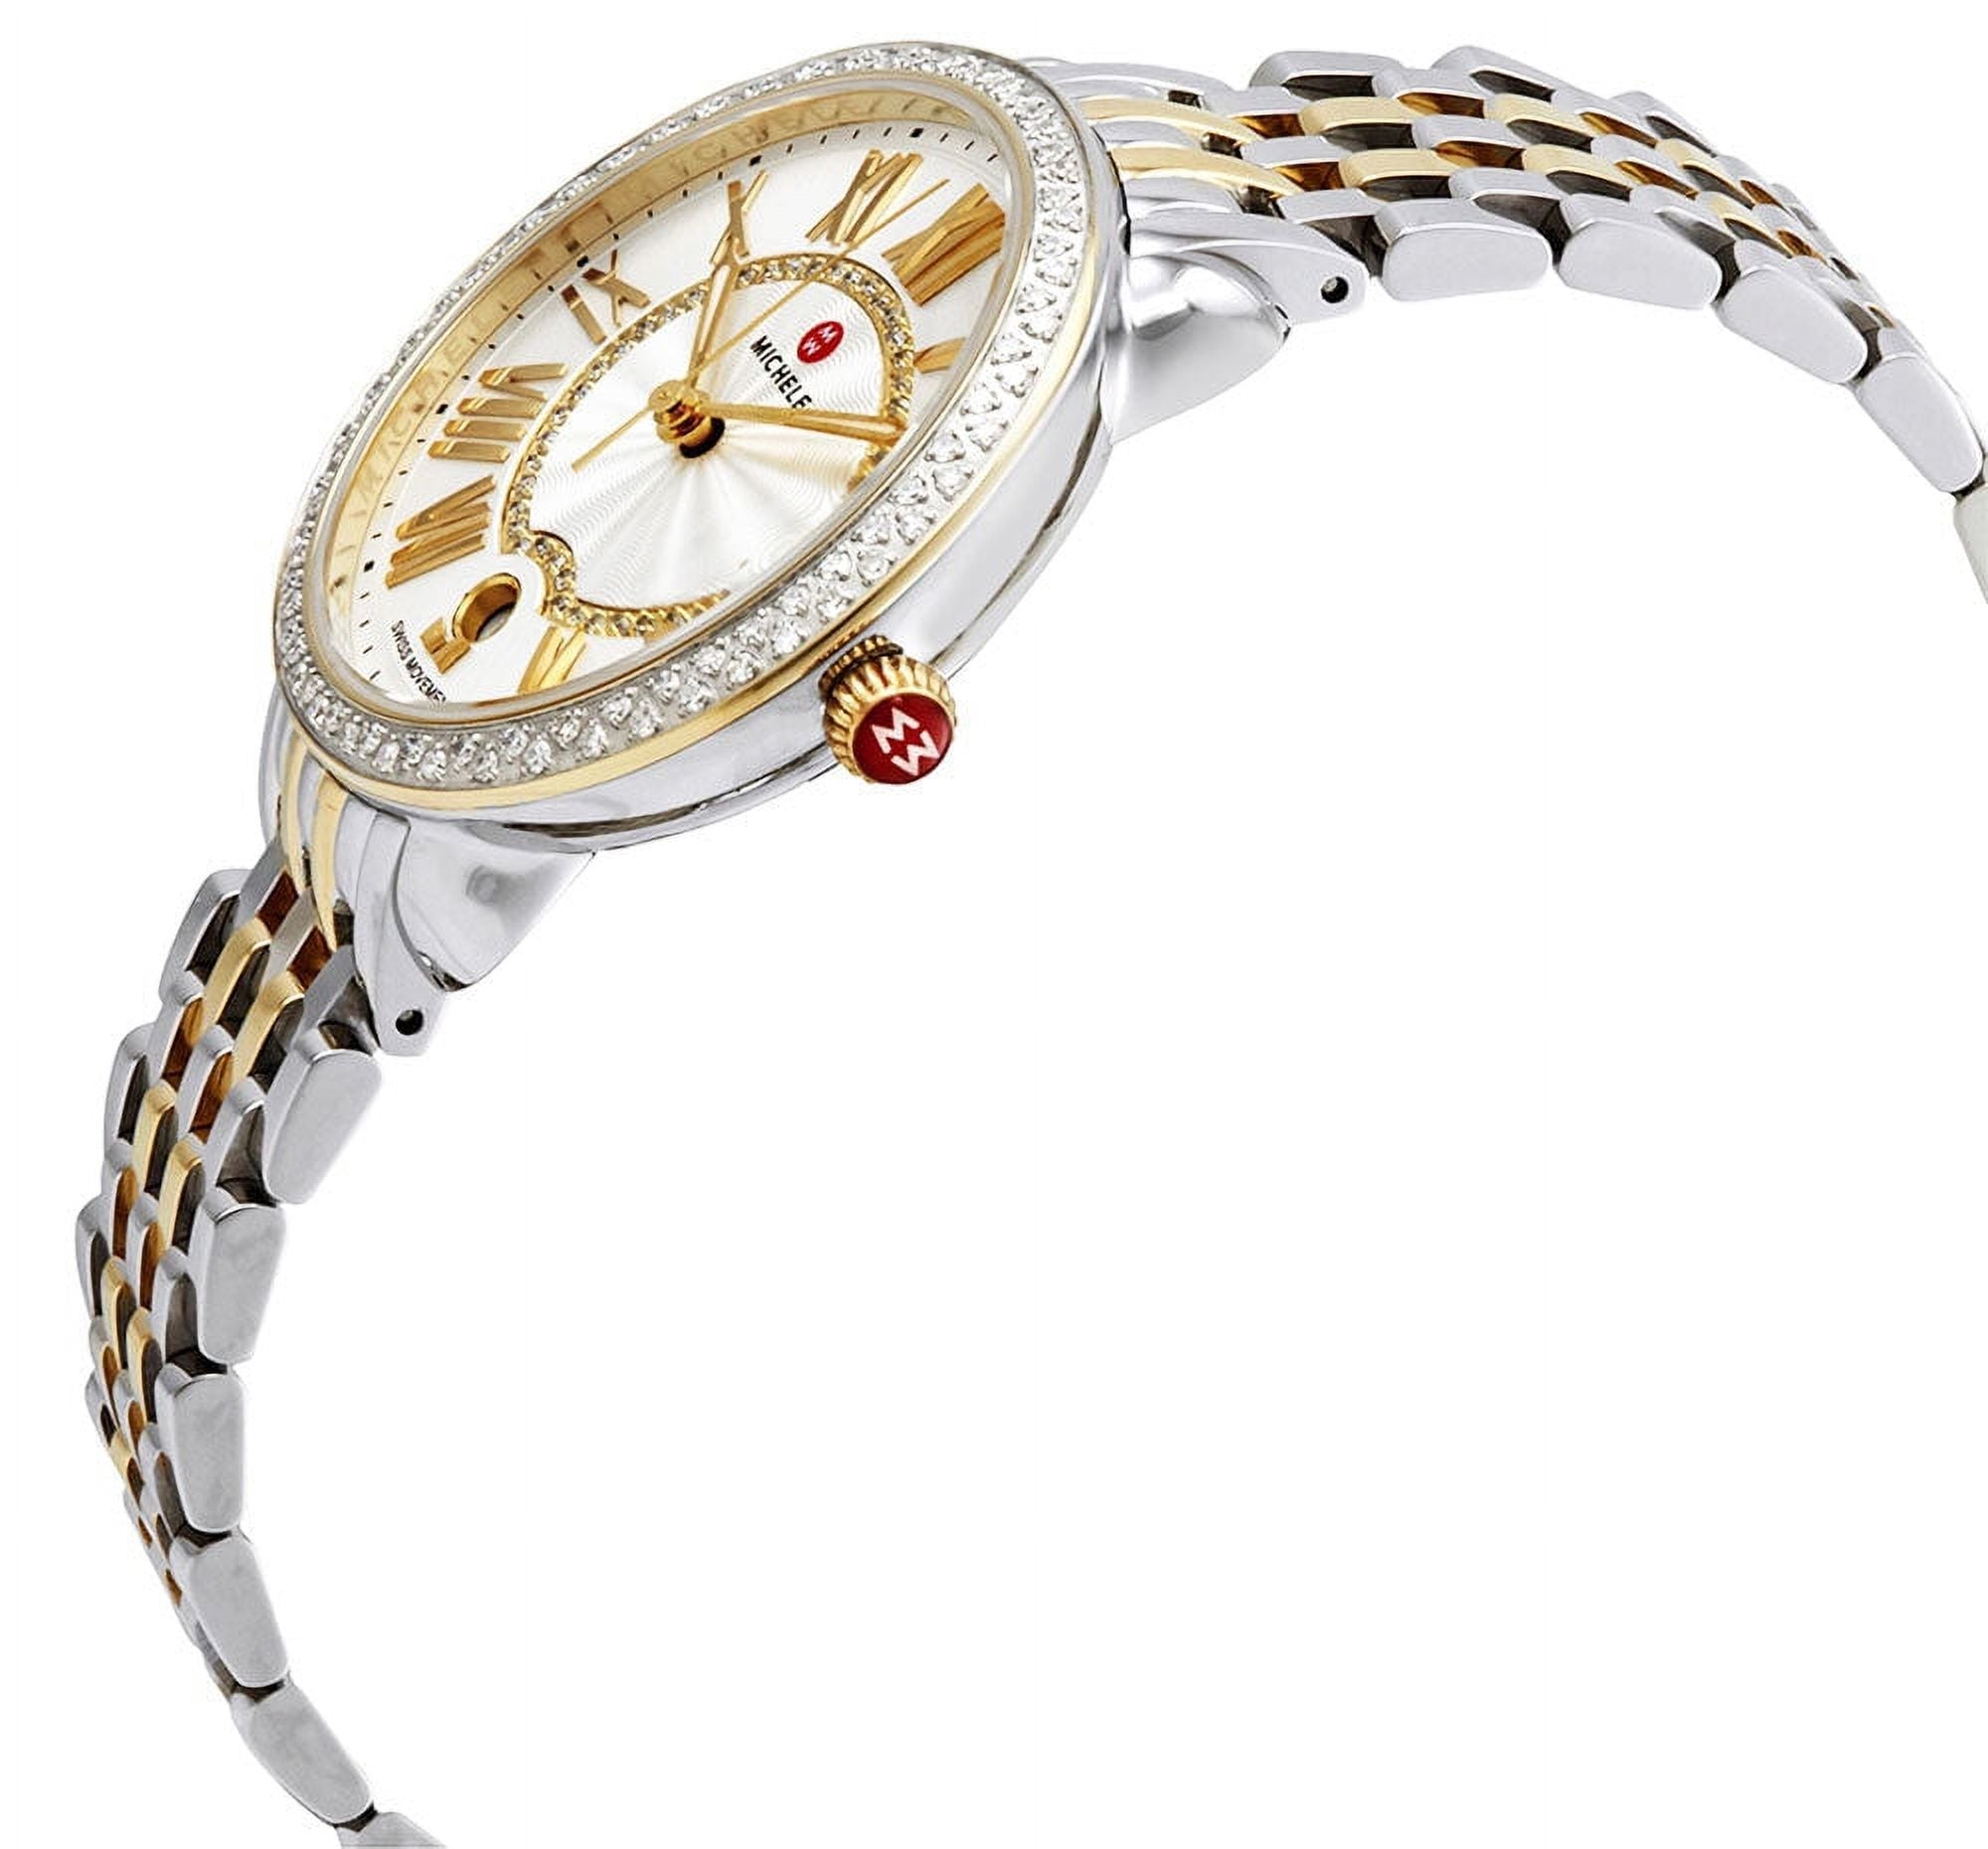 36mm Ladies Serein Mid Two Tone Diamond Watch - (18k Gold) - image 2 of 3